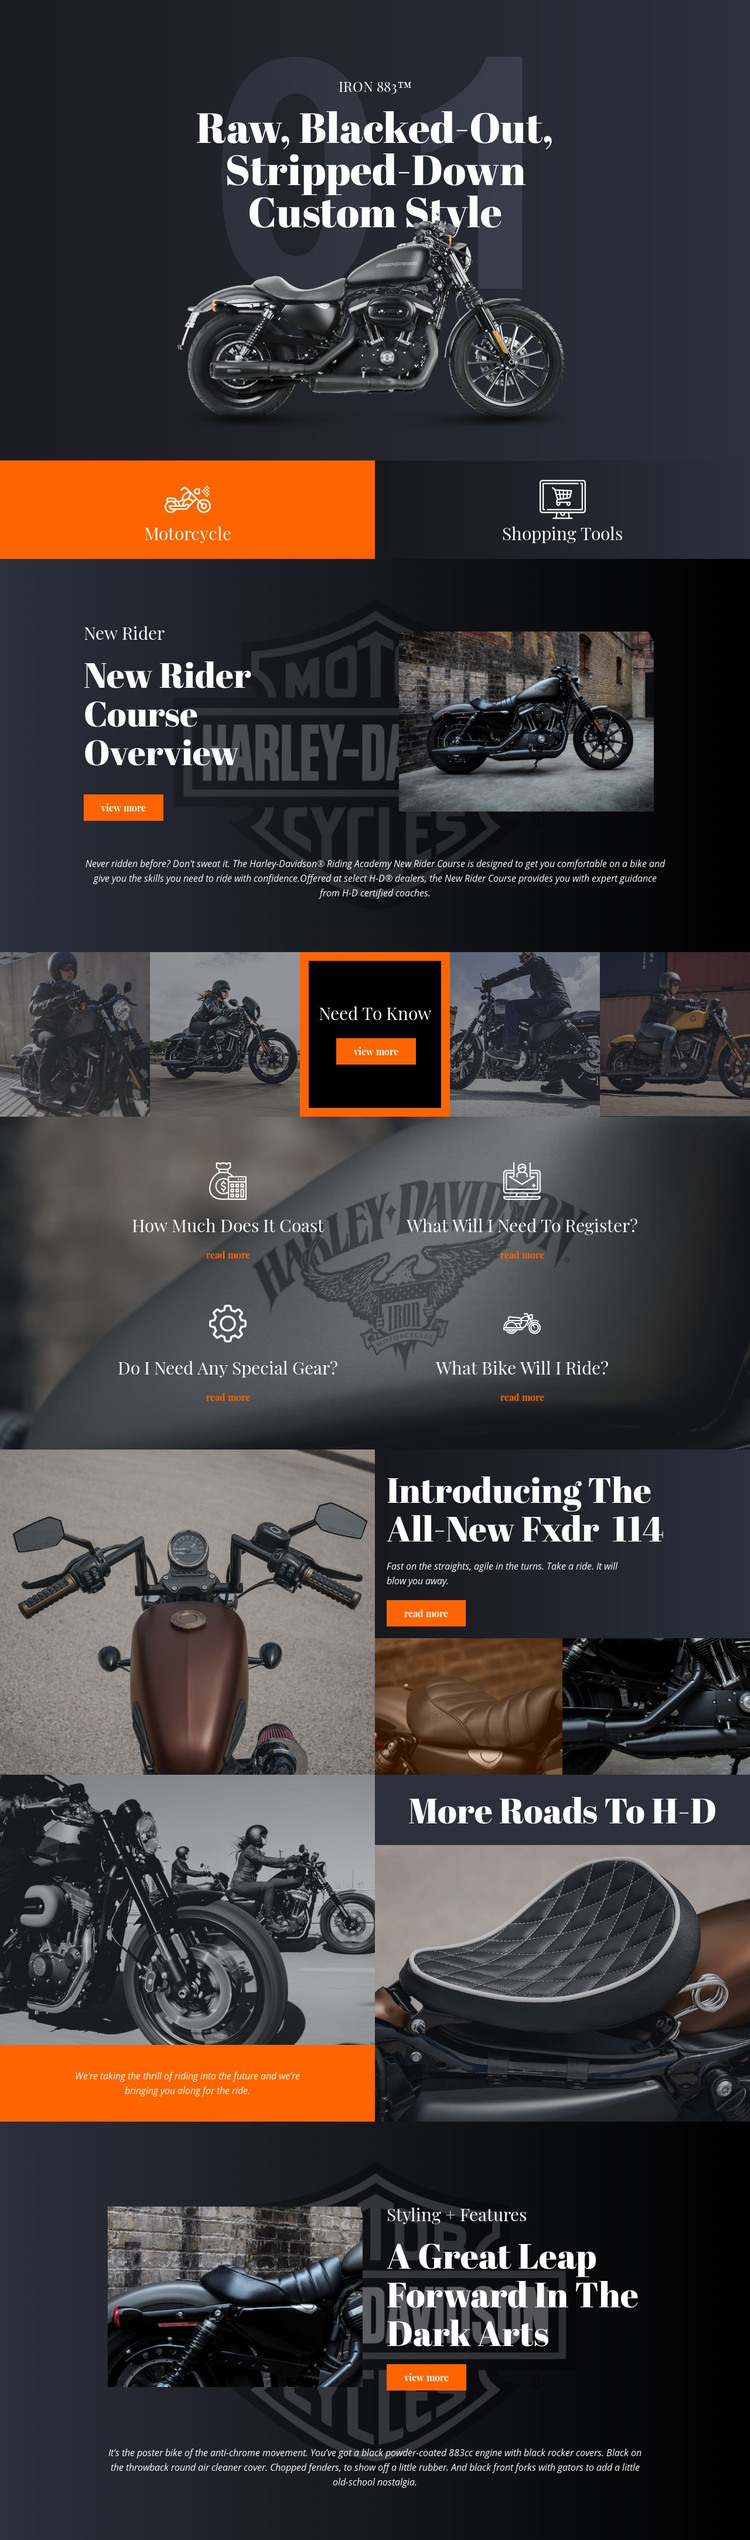 Harley Davidson Homepage Design